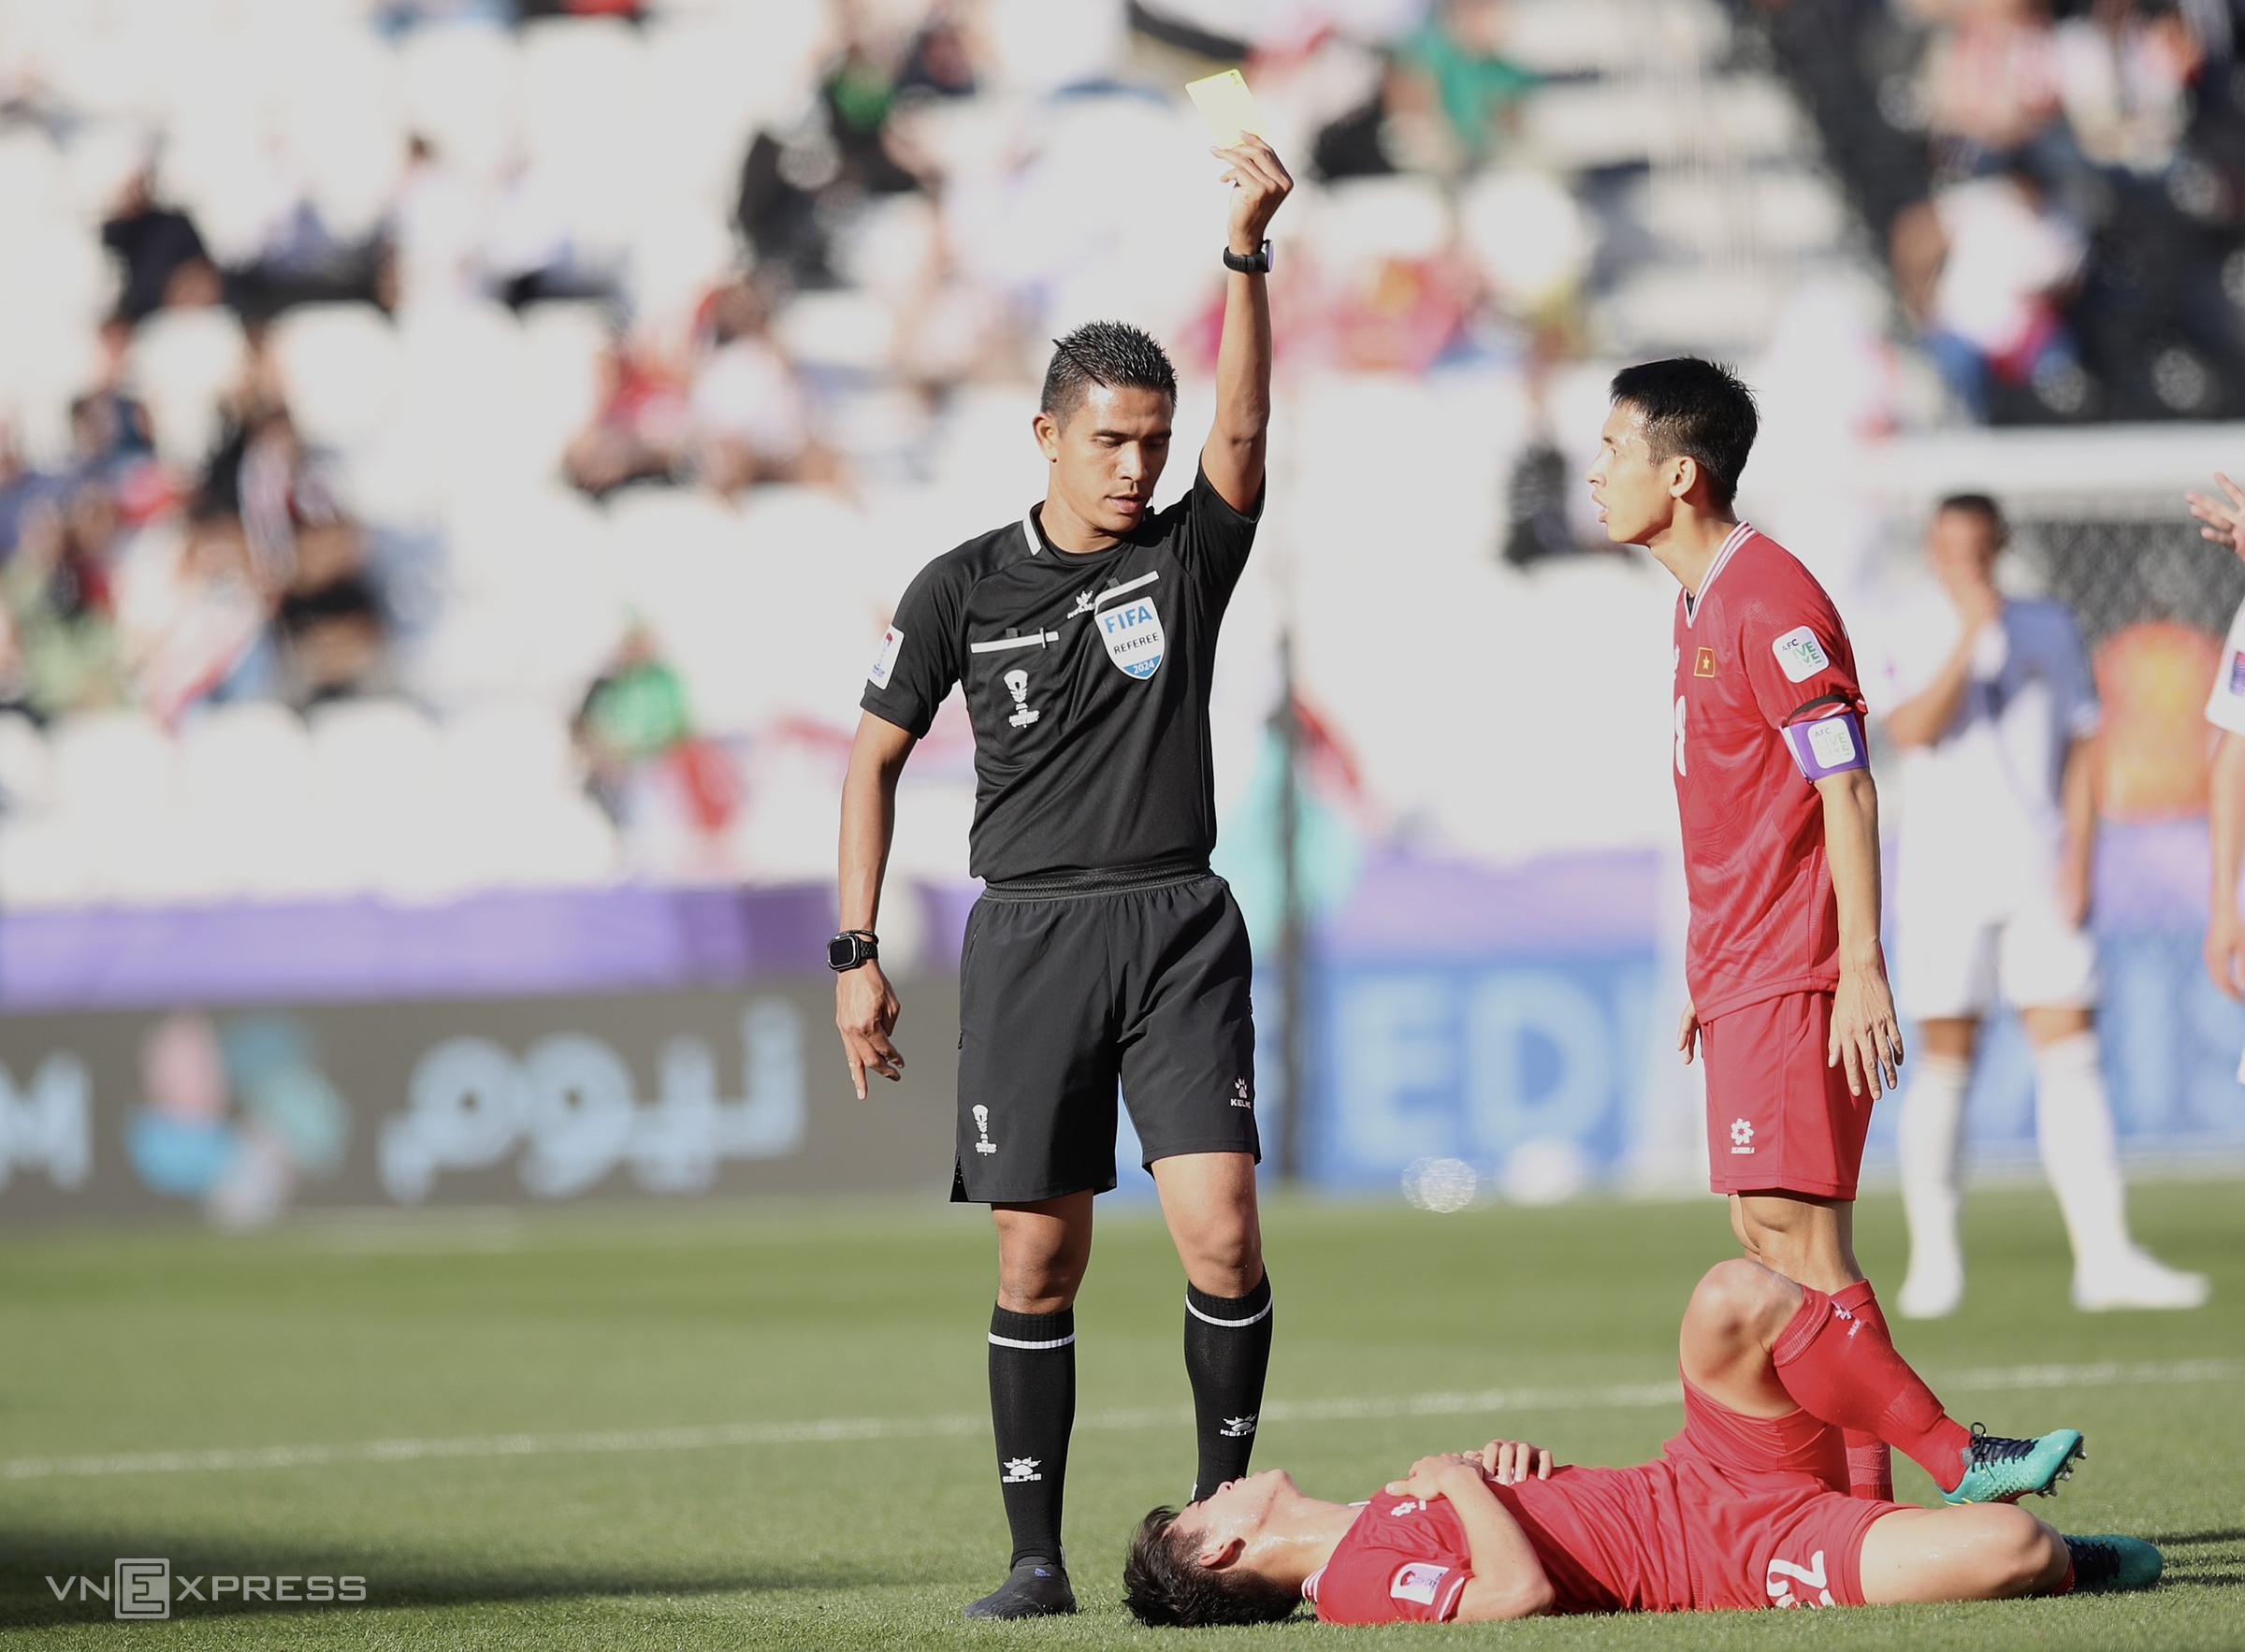 referee decisions against vietnam in iraq defeat correct: ref supervisor